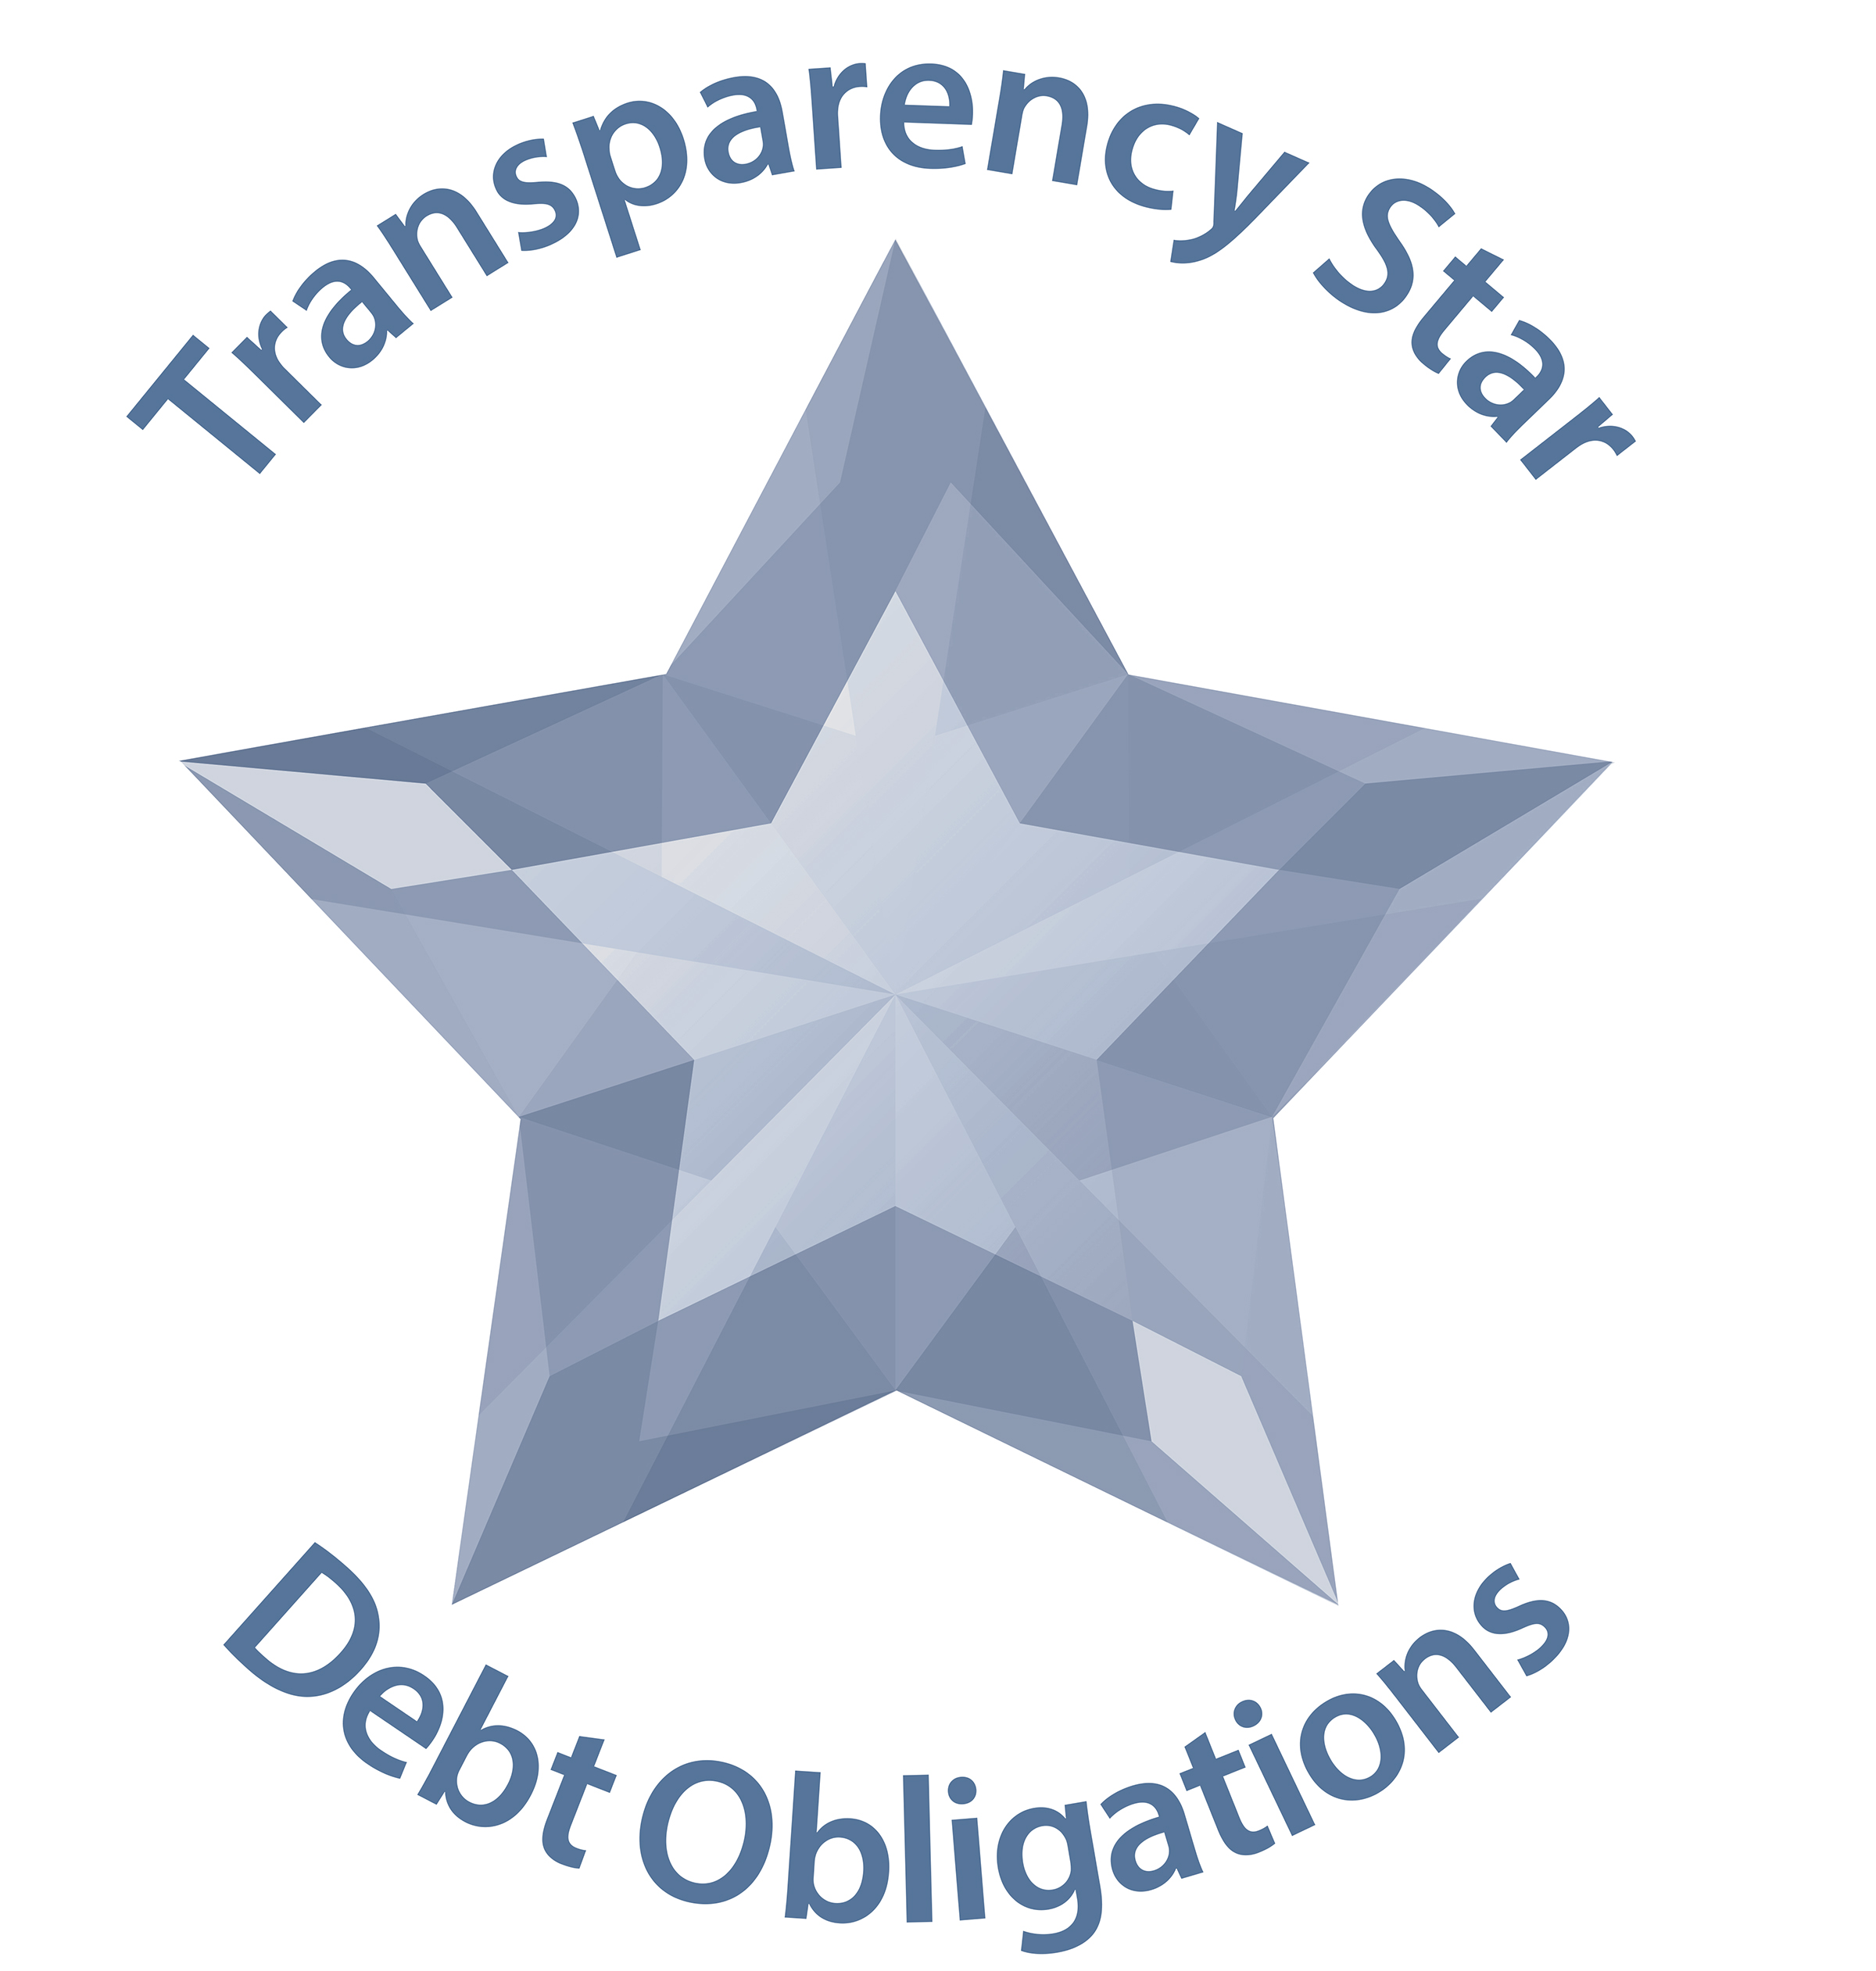 Transparency Star Debt Obligations Logo